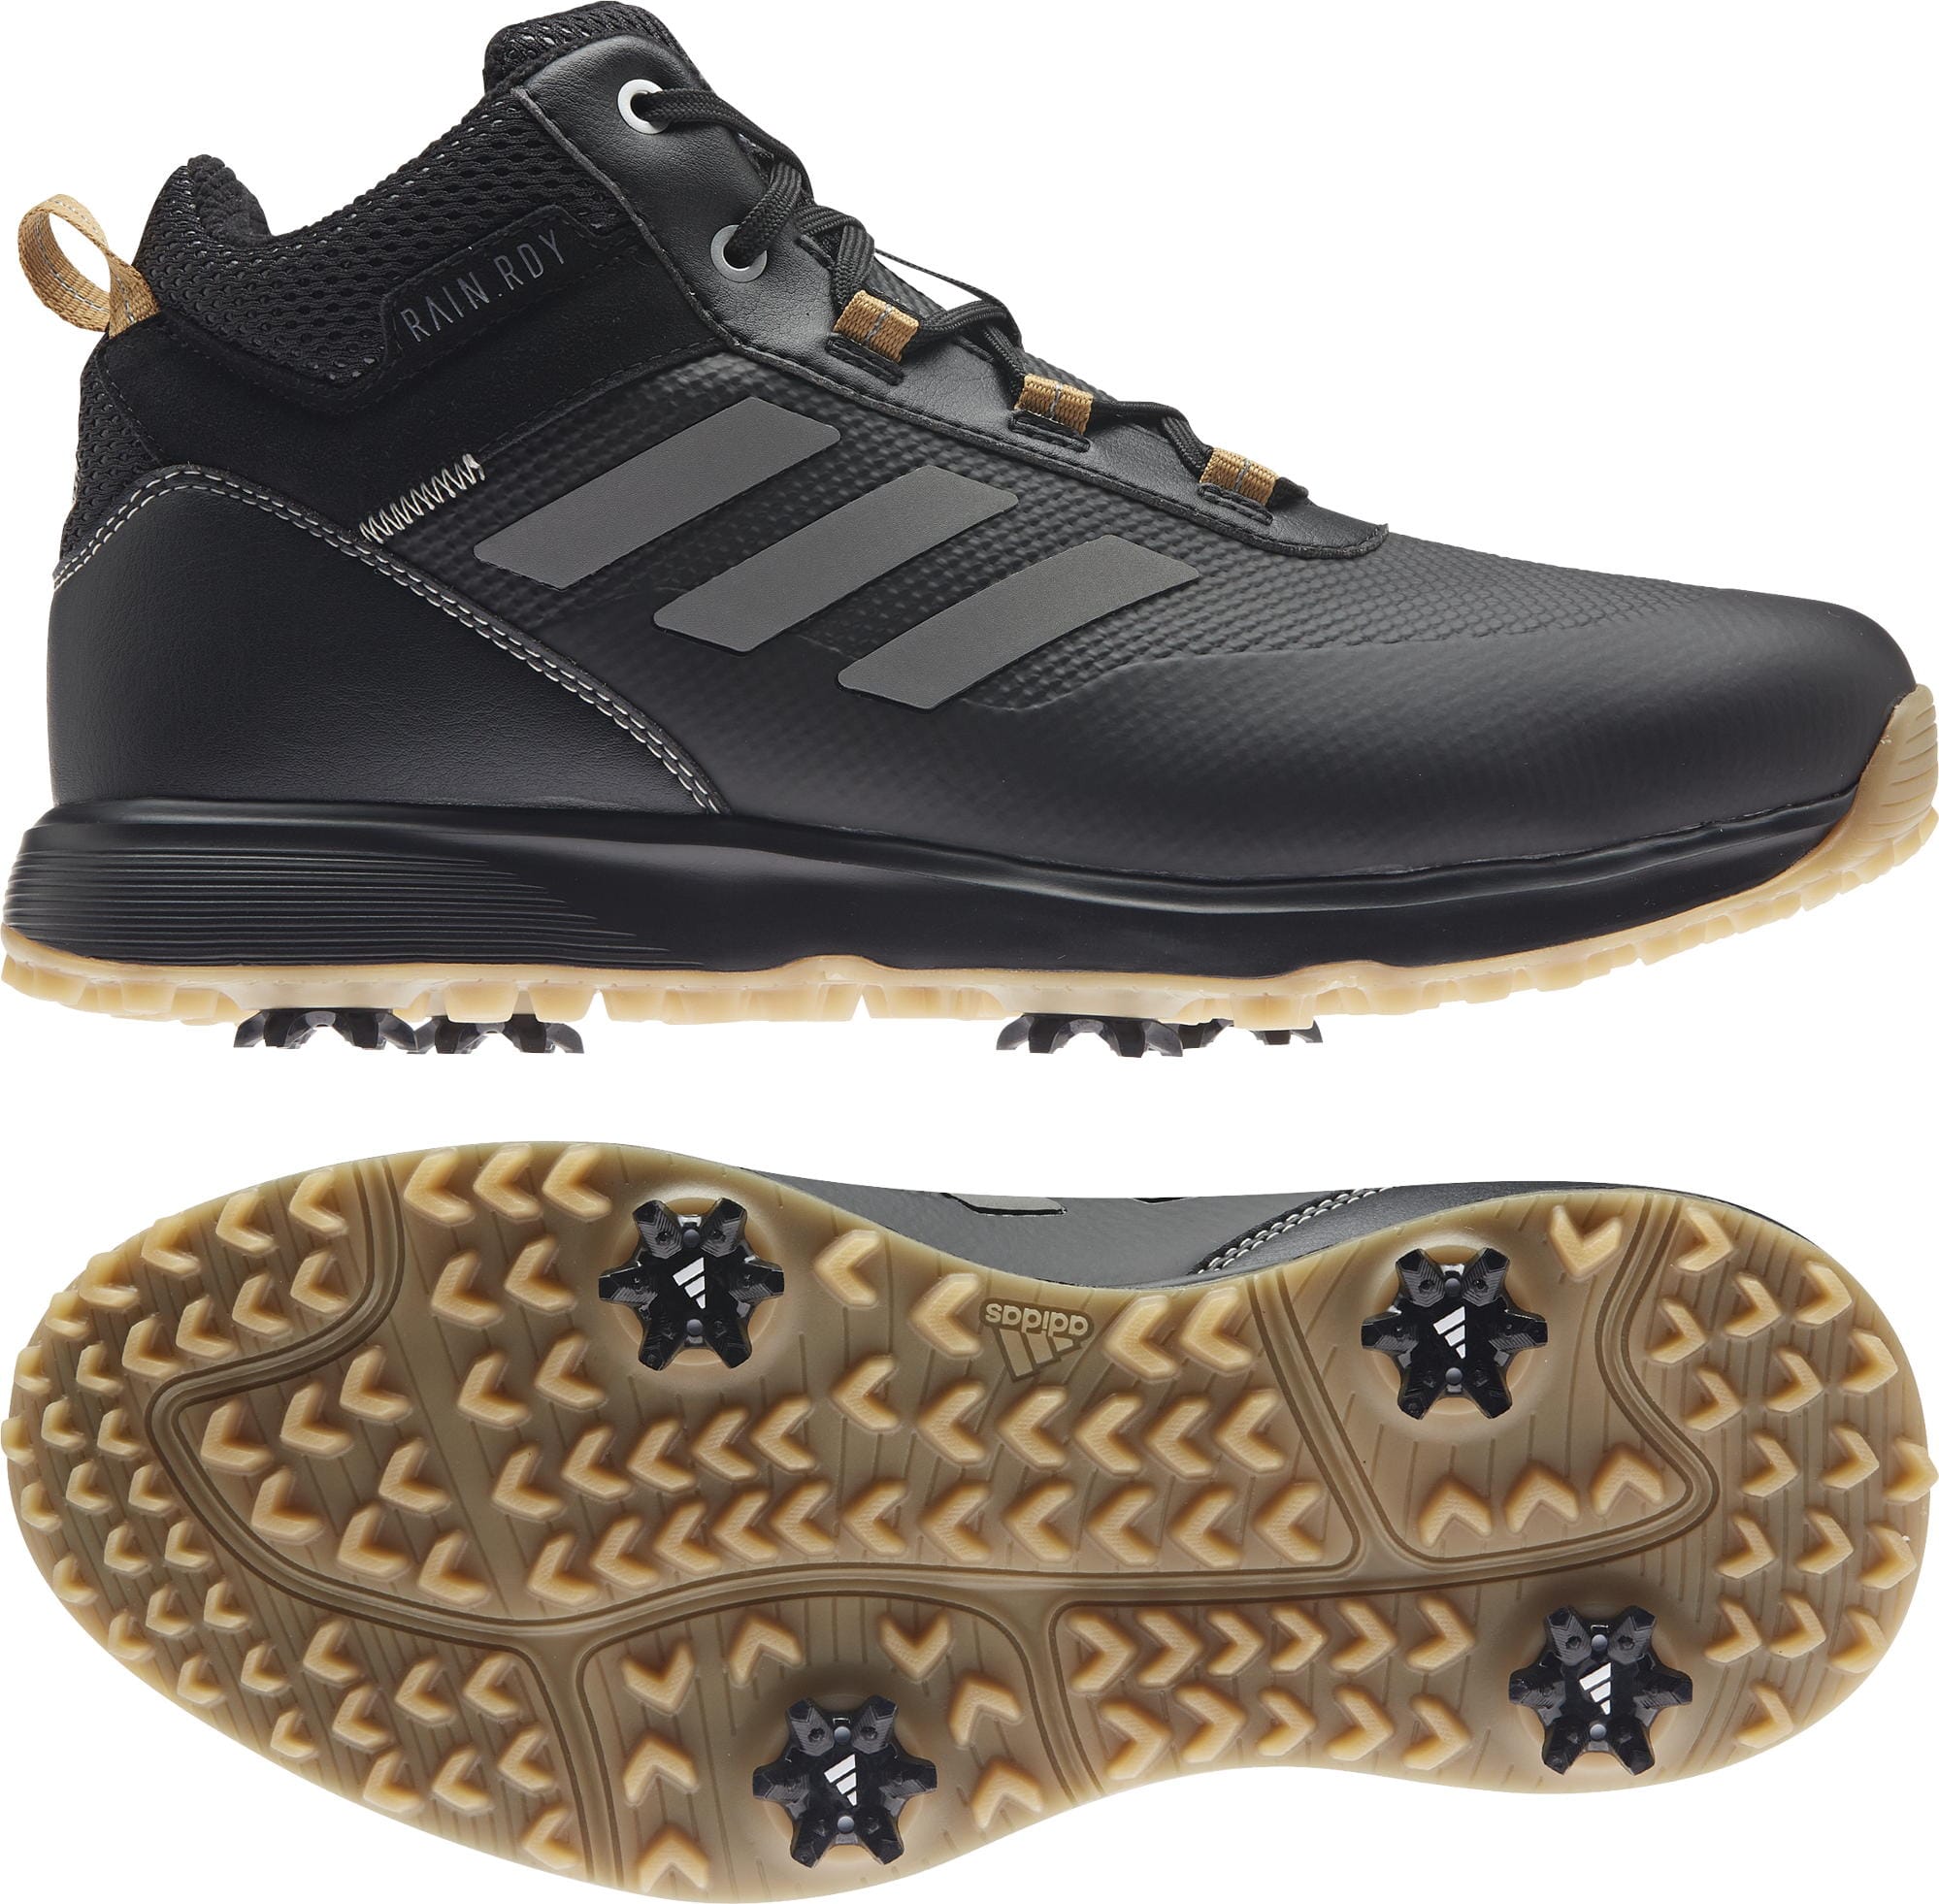 adidas S2G MID Boot Golfschuh, black/grey/mesa